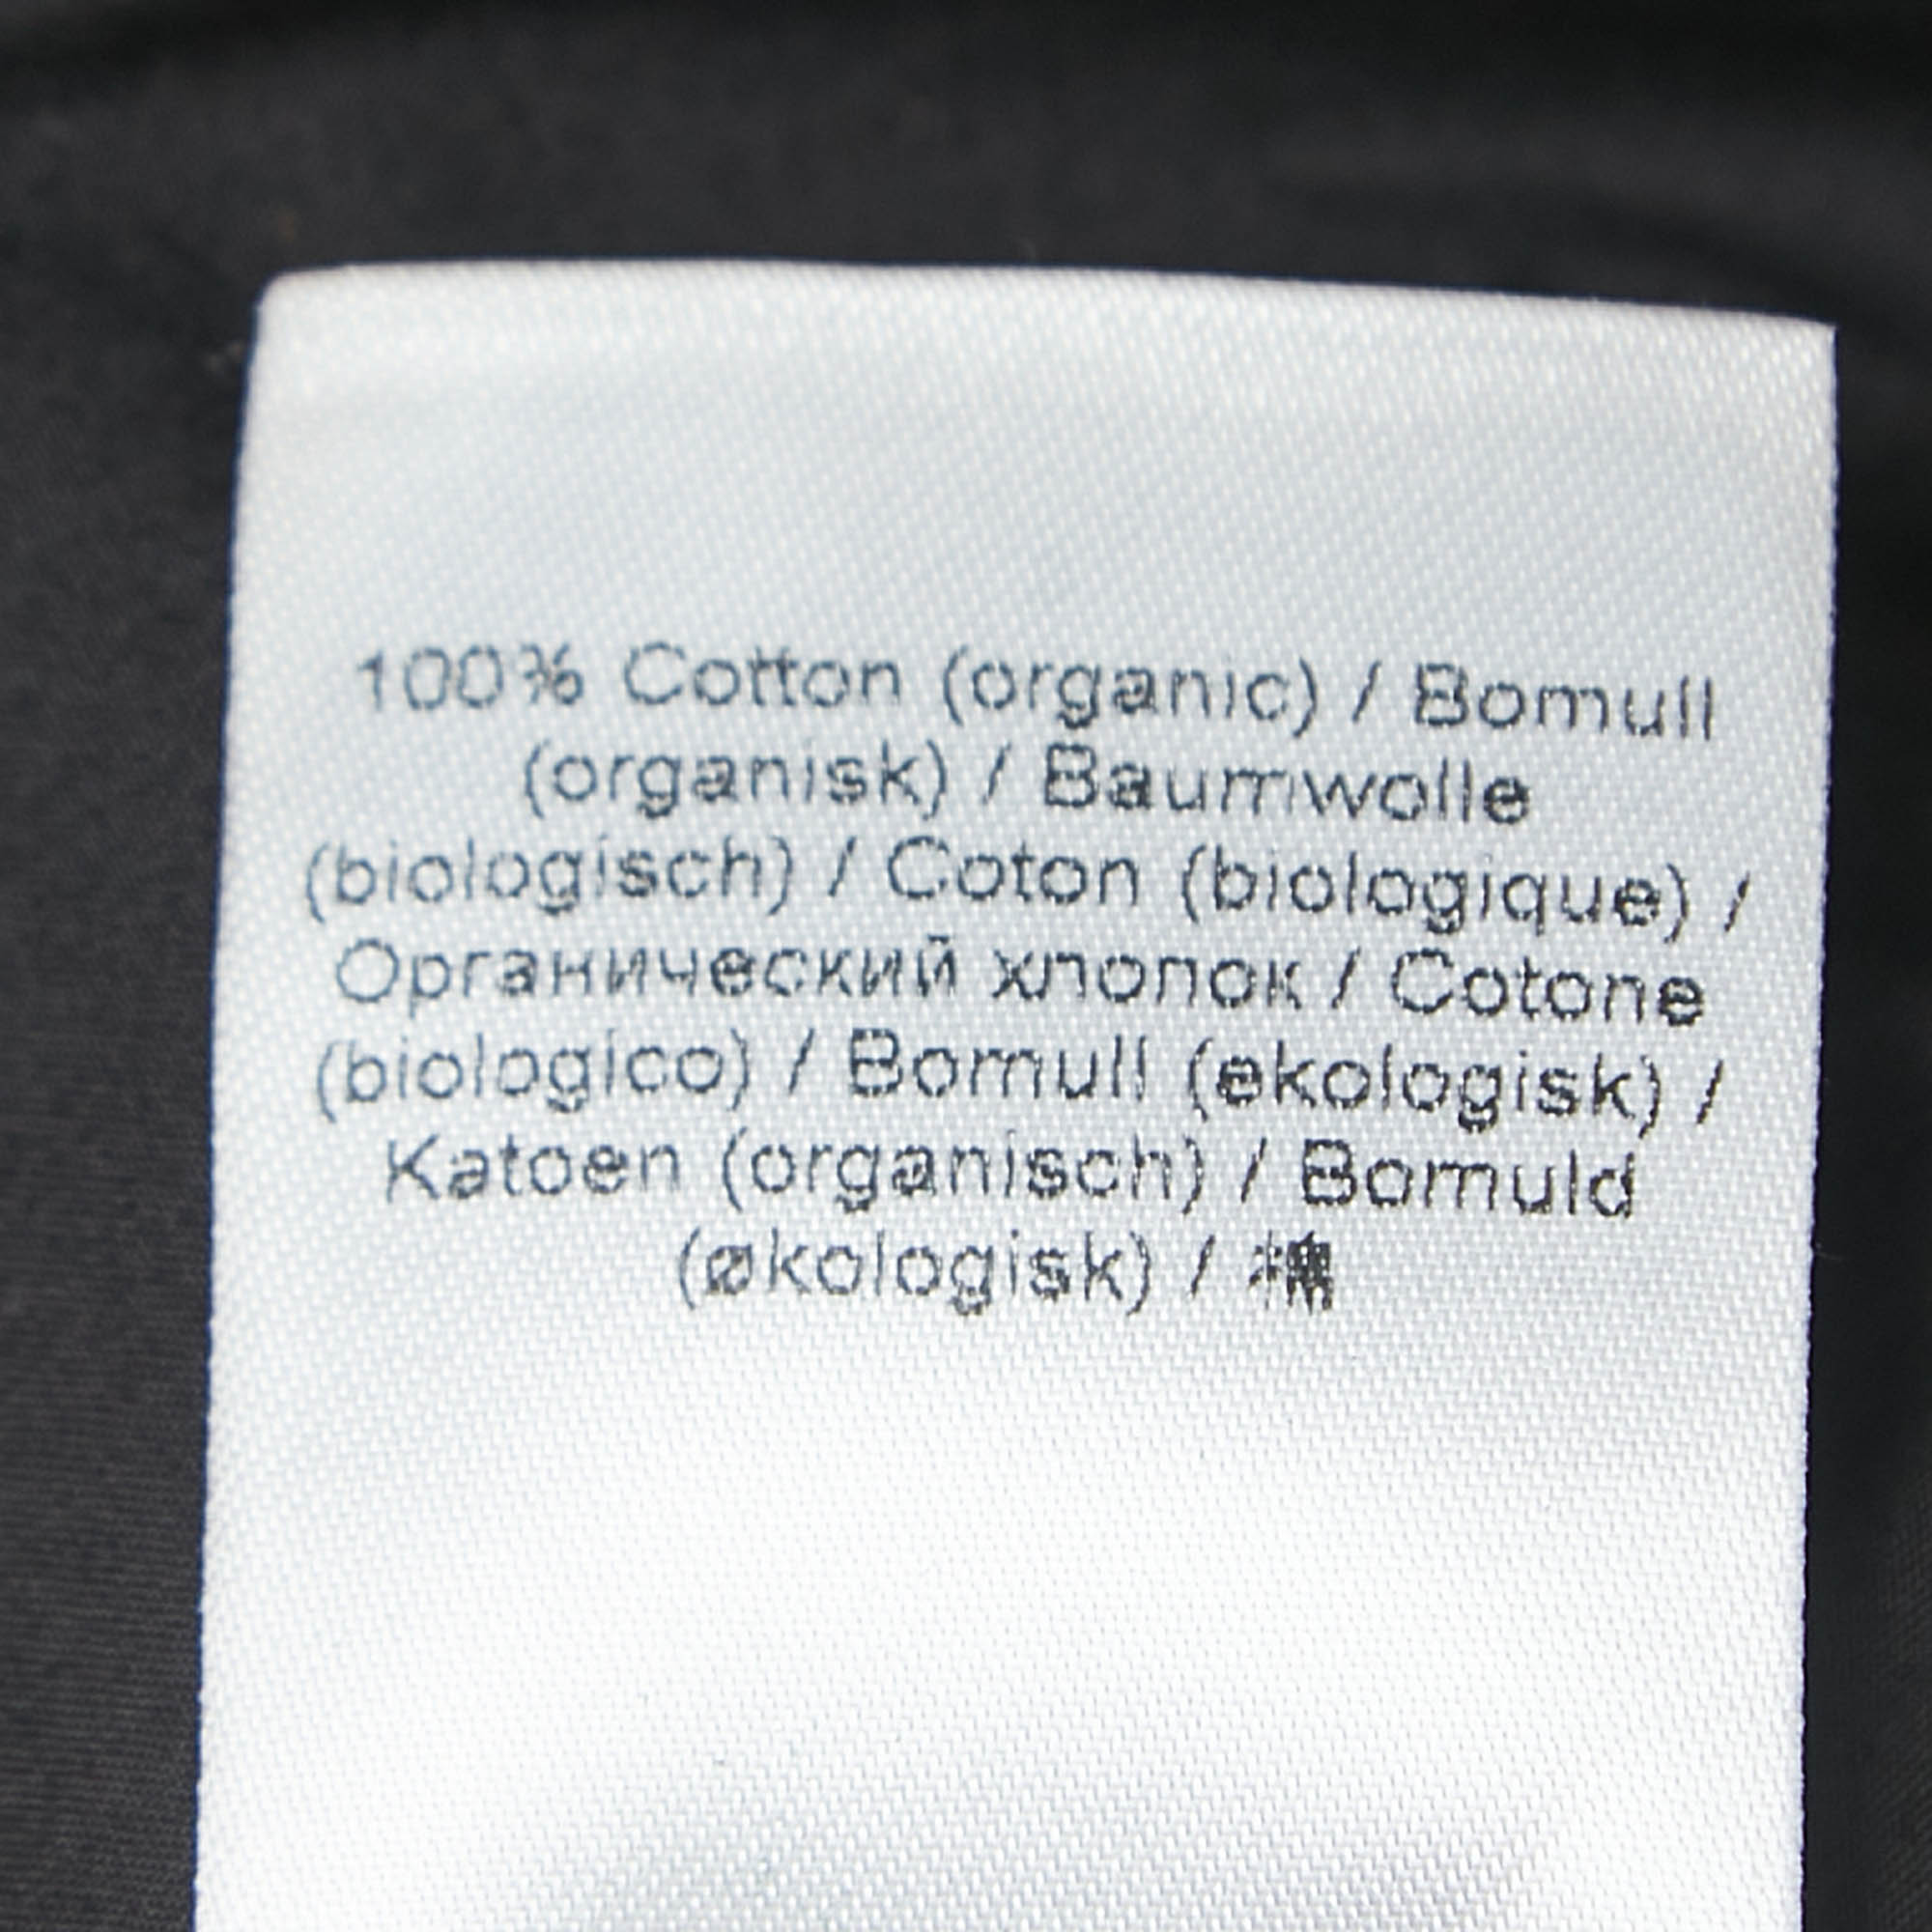 Ganni Black Cotton Buttoned Sleeveless Shirt Blouse XS